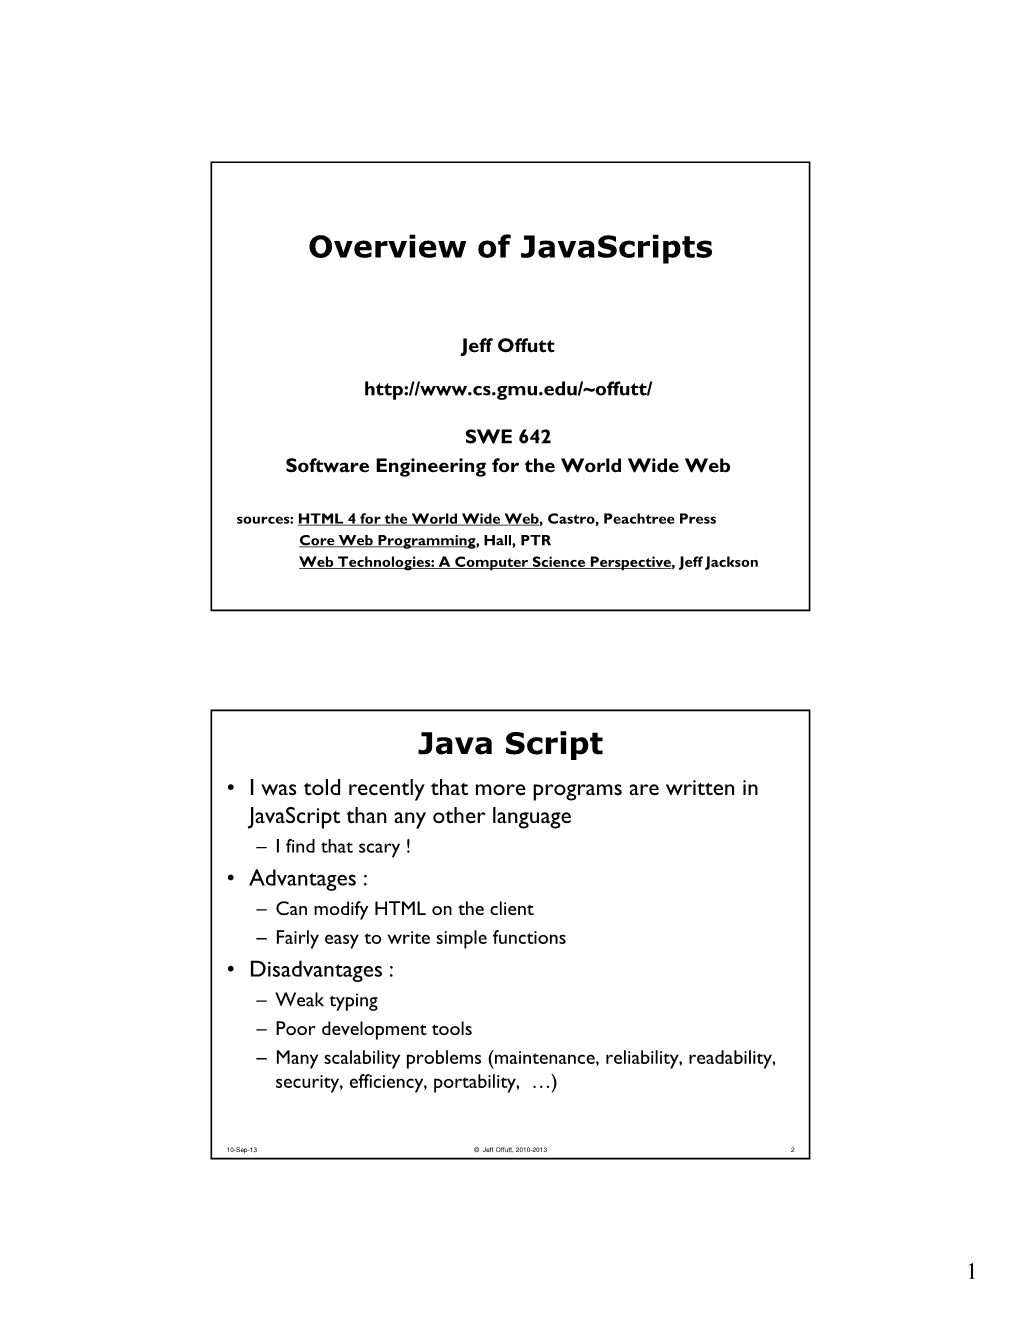 Overview of Javascripts Java Script